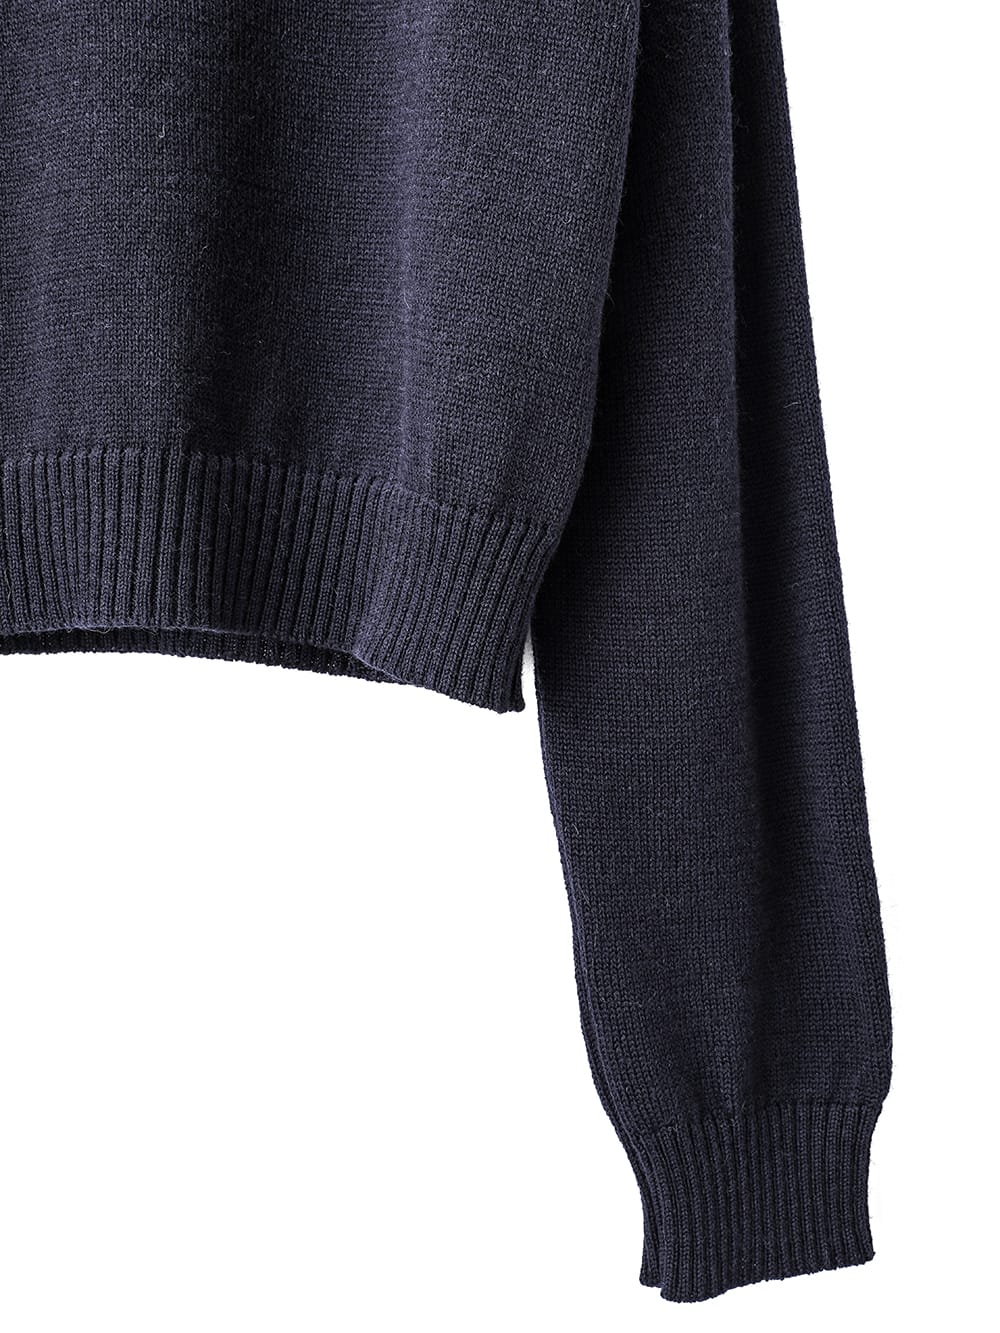 shetland wool cropped crewneck sweater.